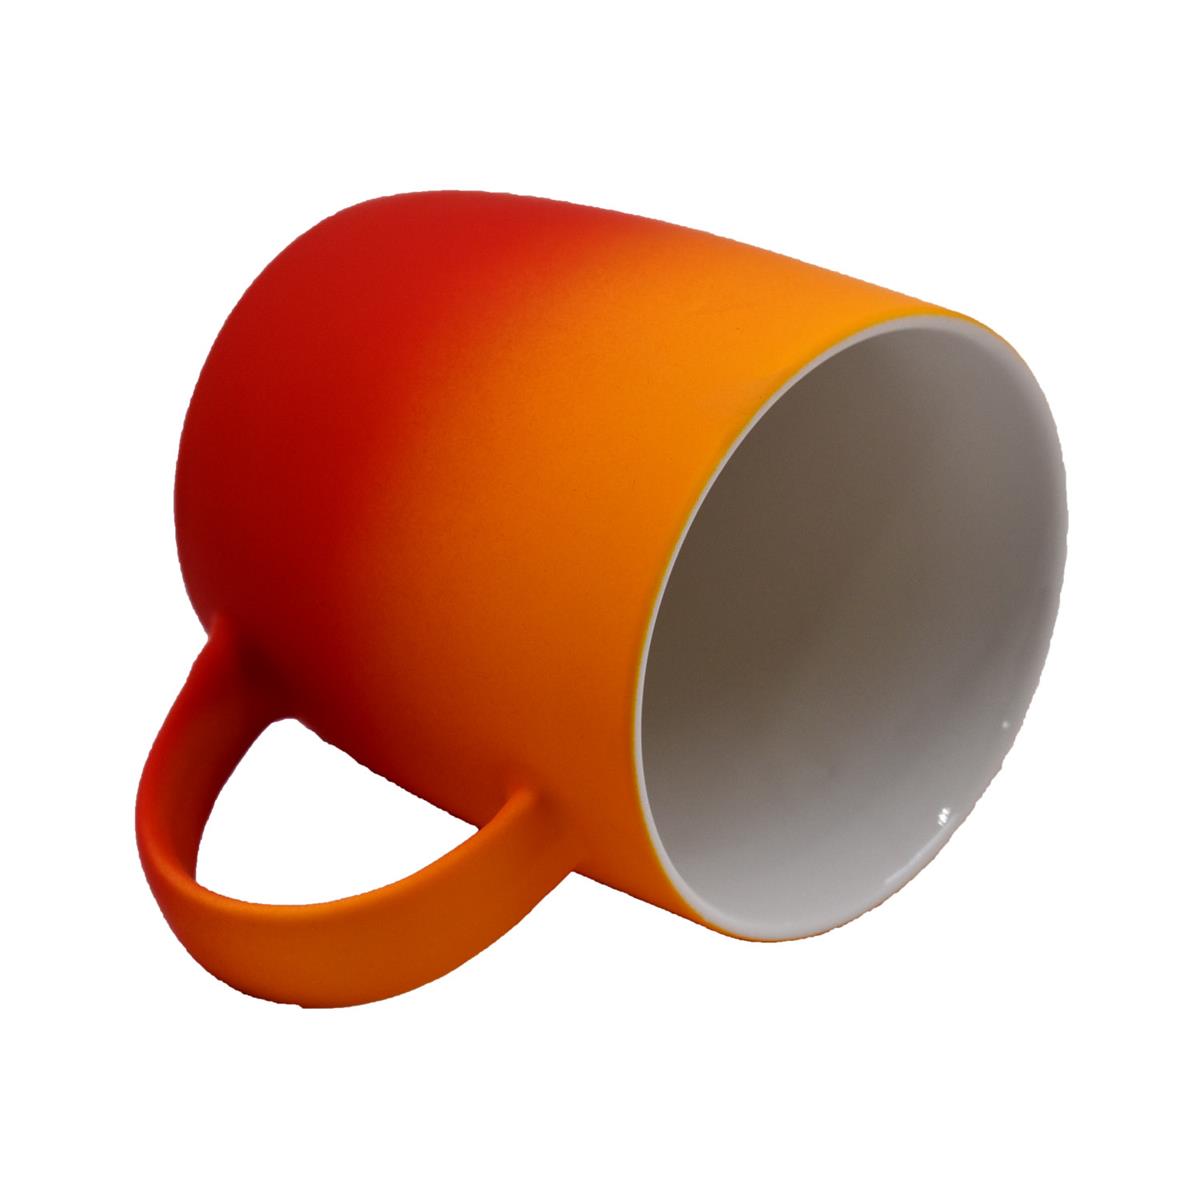 Ceramic Coffee or Tea Mug with handle - 325ml (BPY173-F)